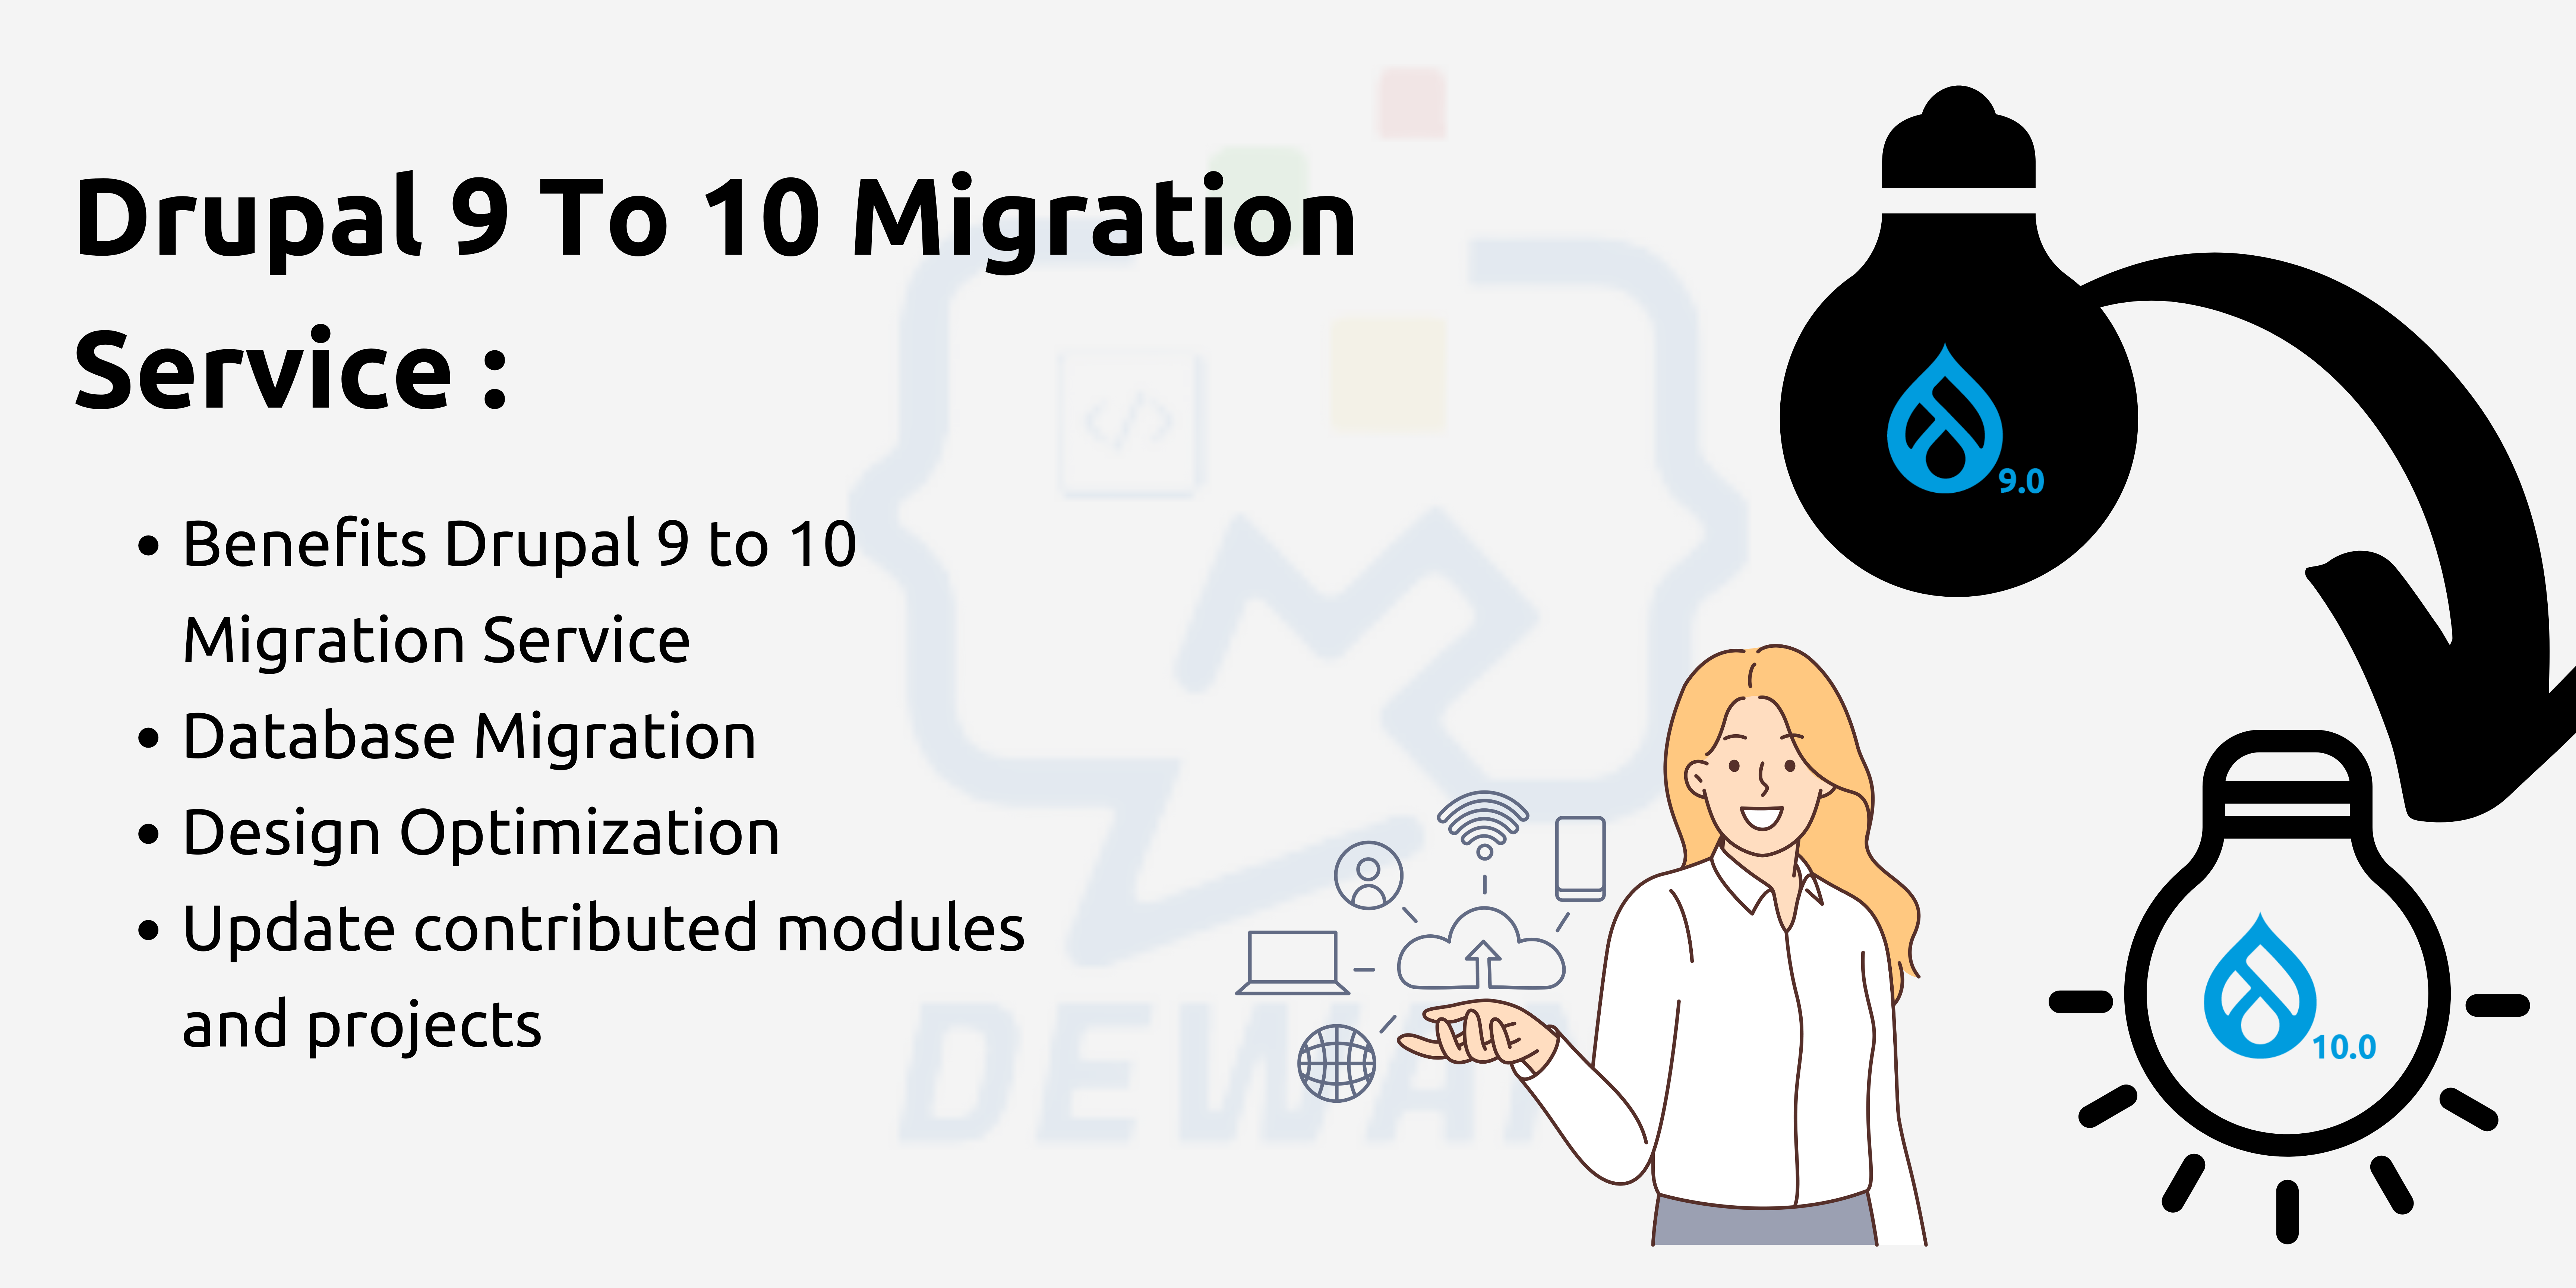 Benefits of Drupal 9 to 10 Migration